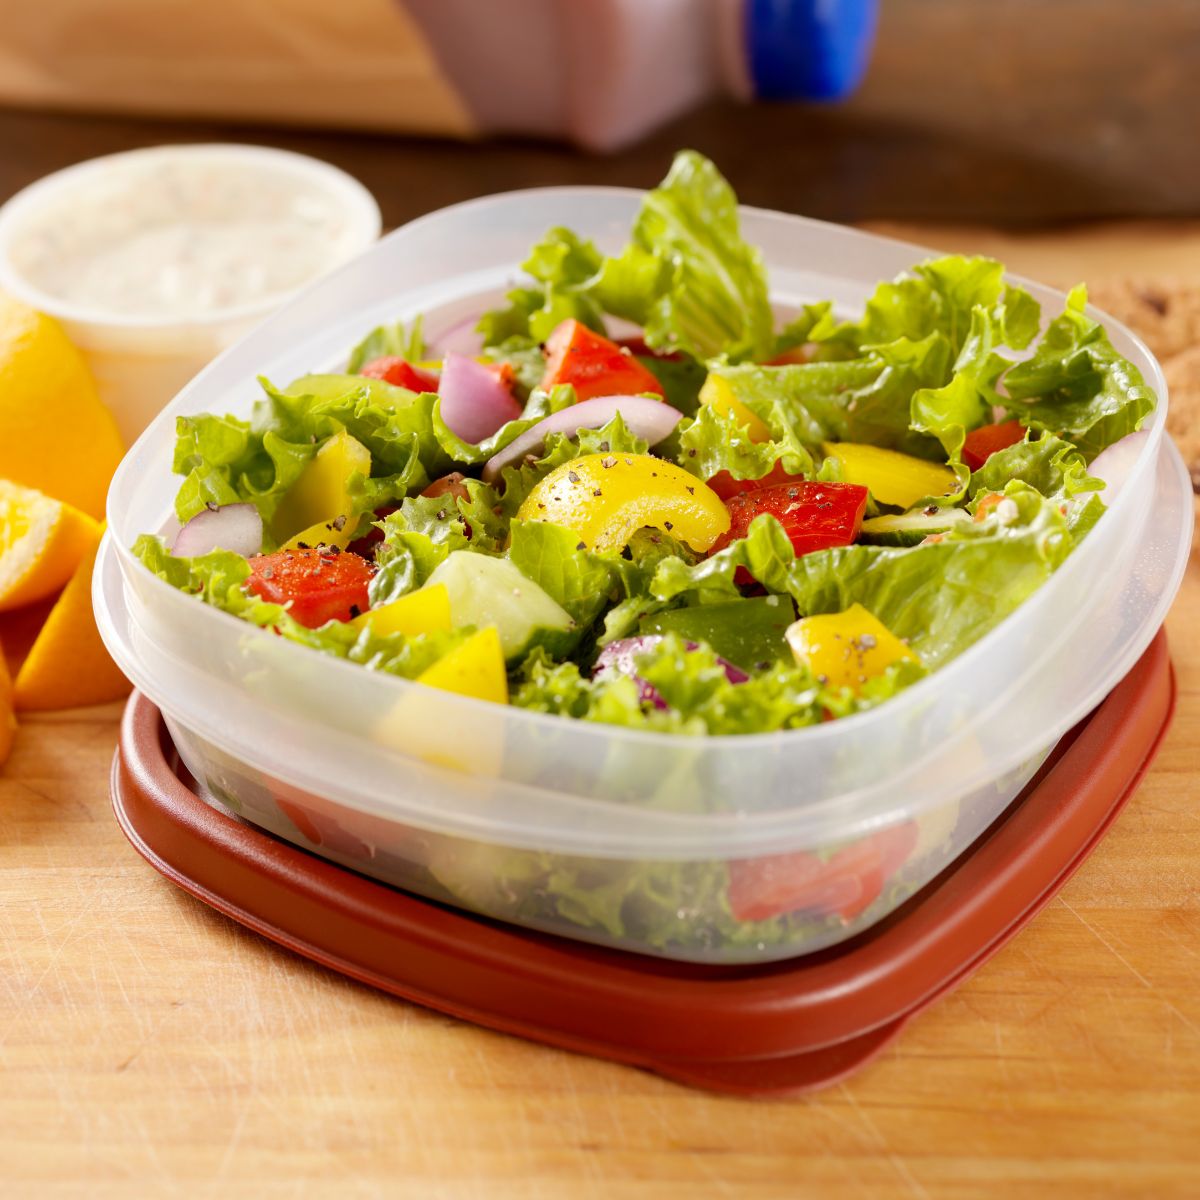 Crisp salad in plastic tupperware. Packed lunch.